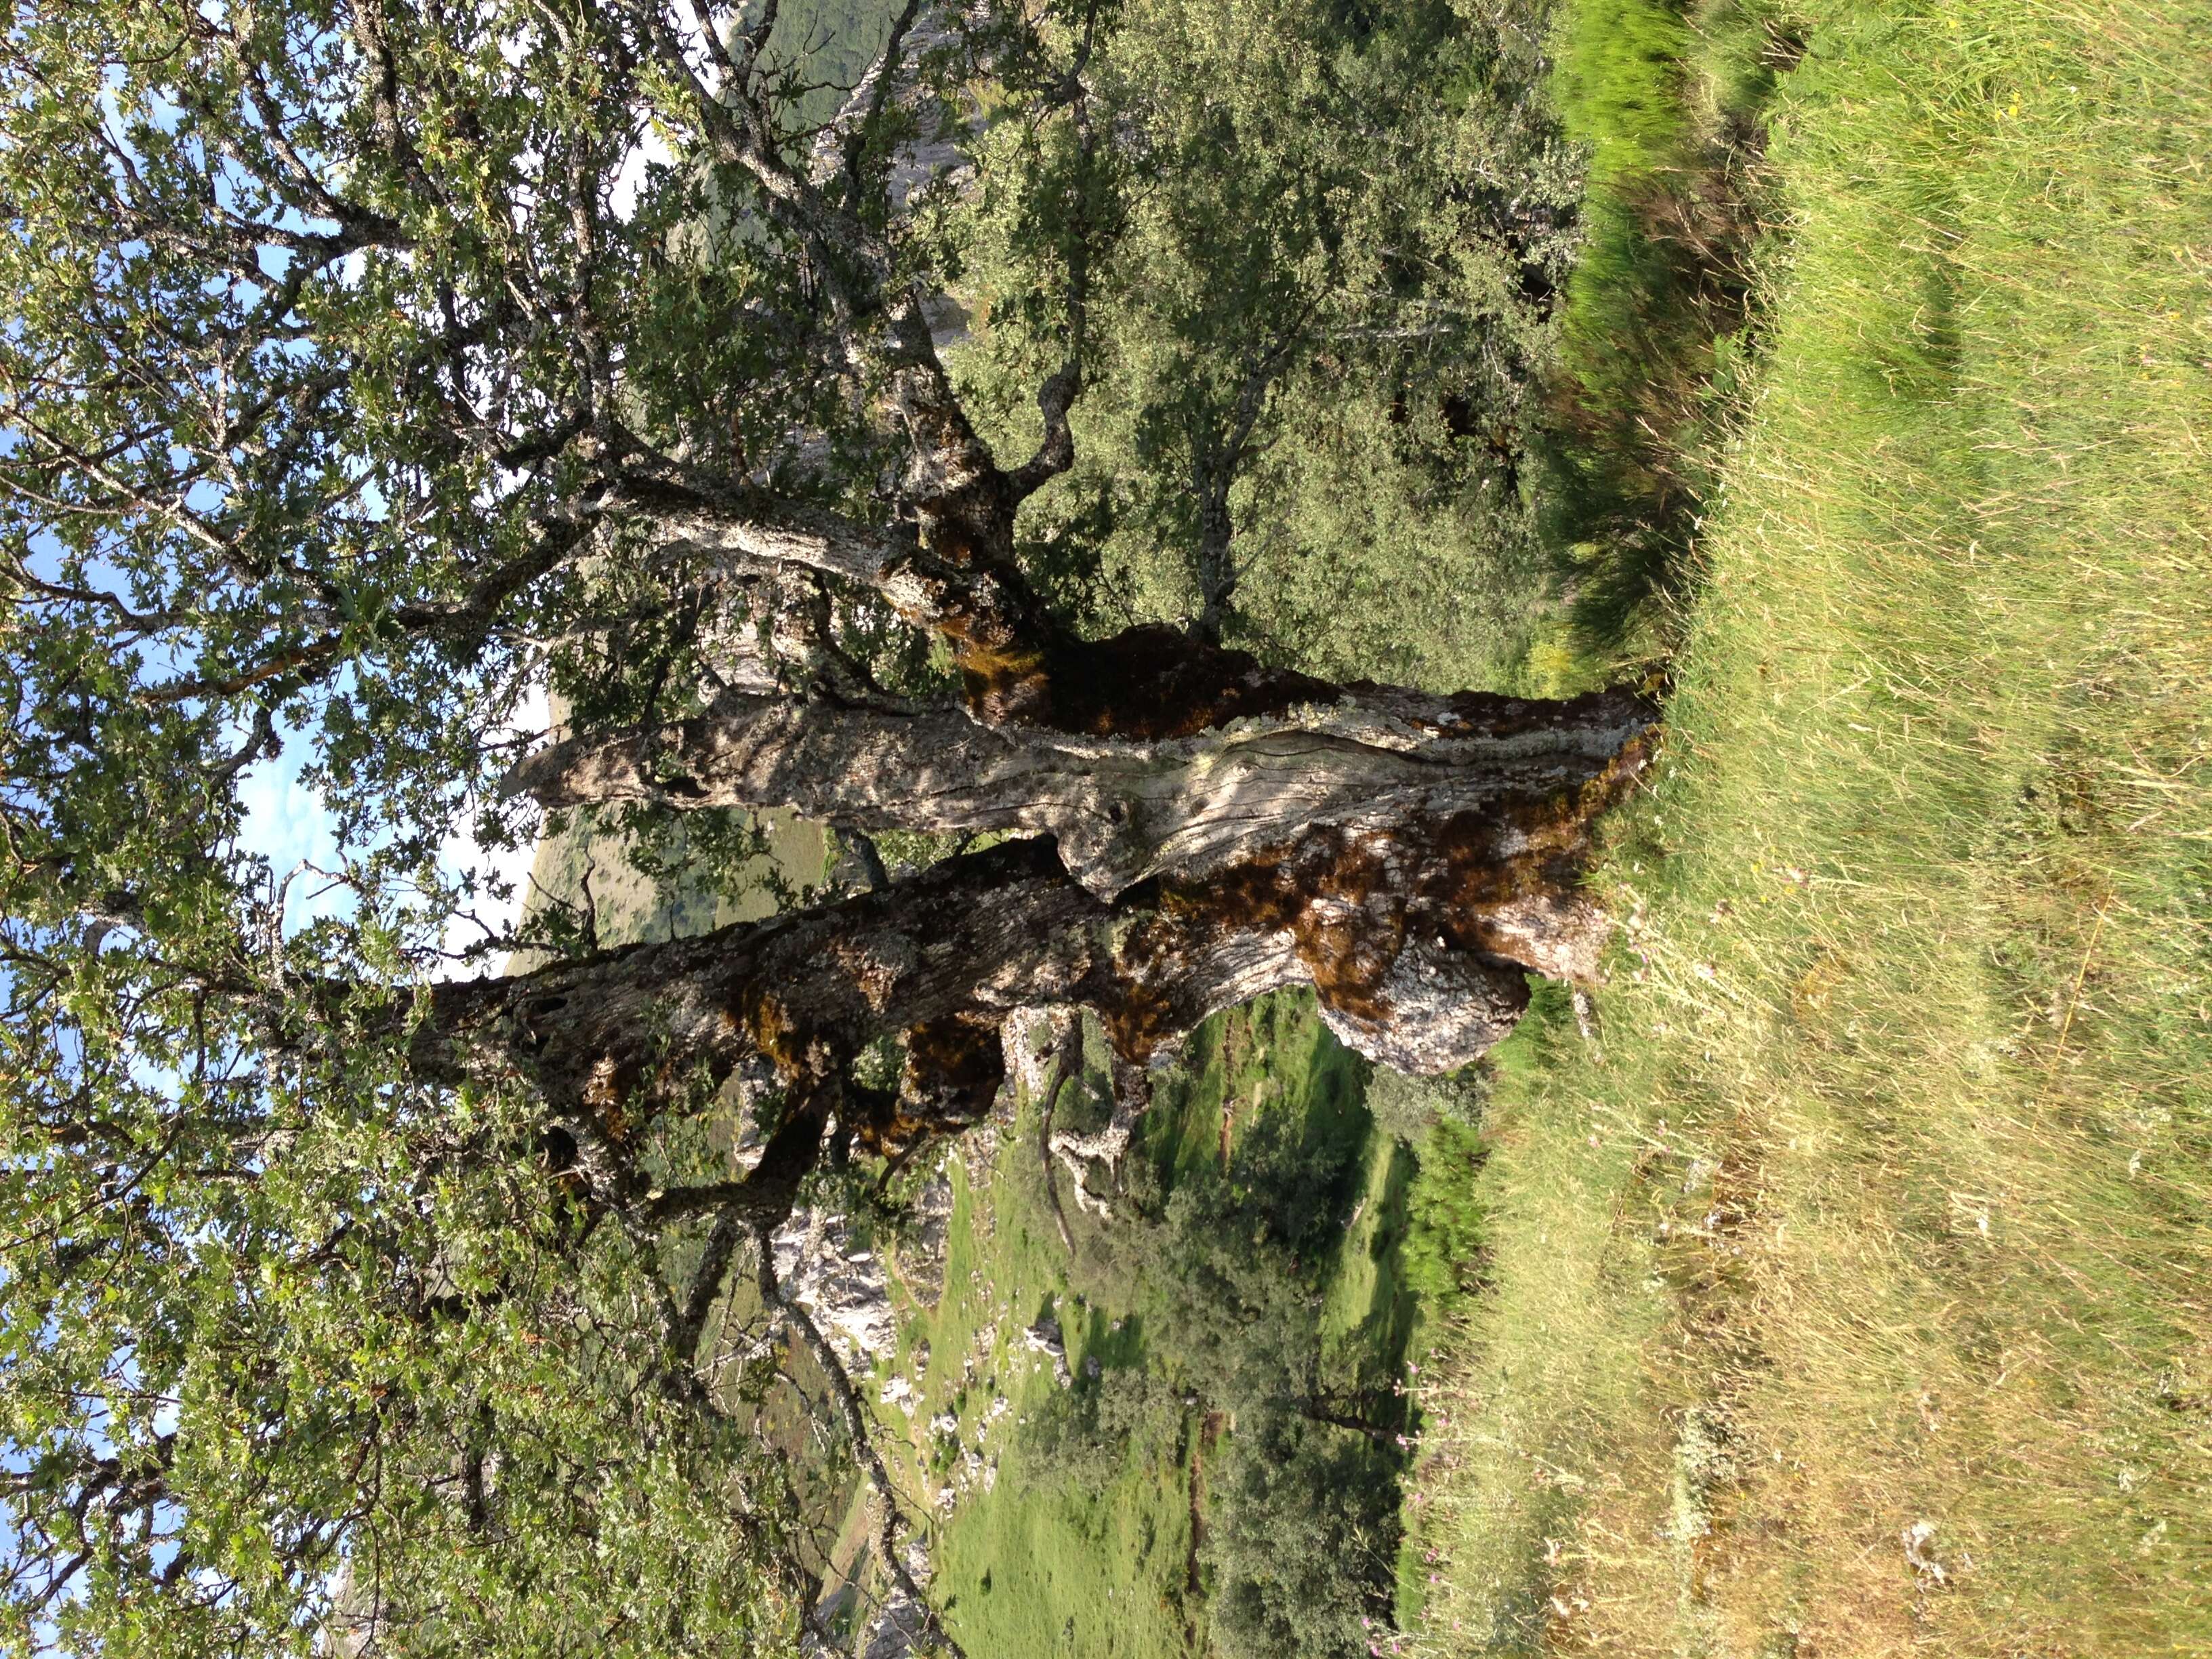 Image of Iberian white oak